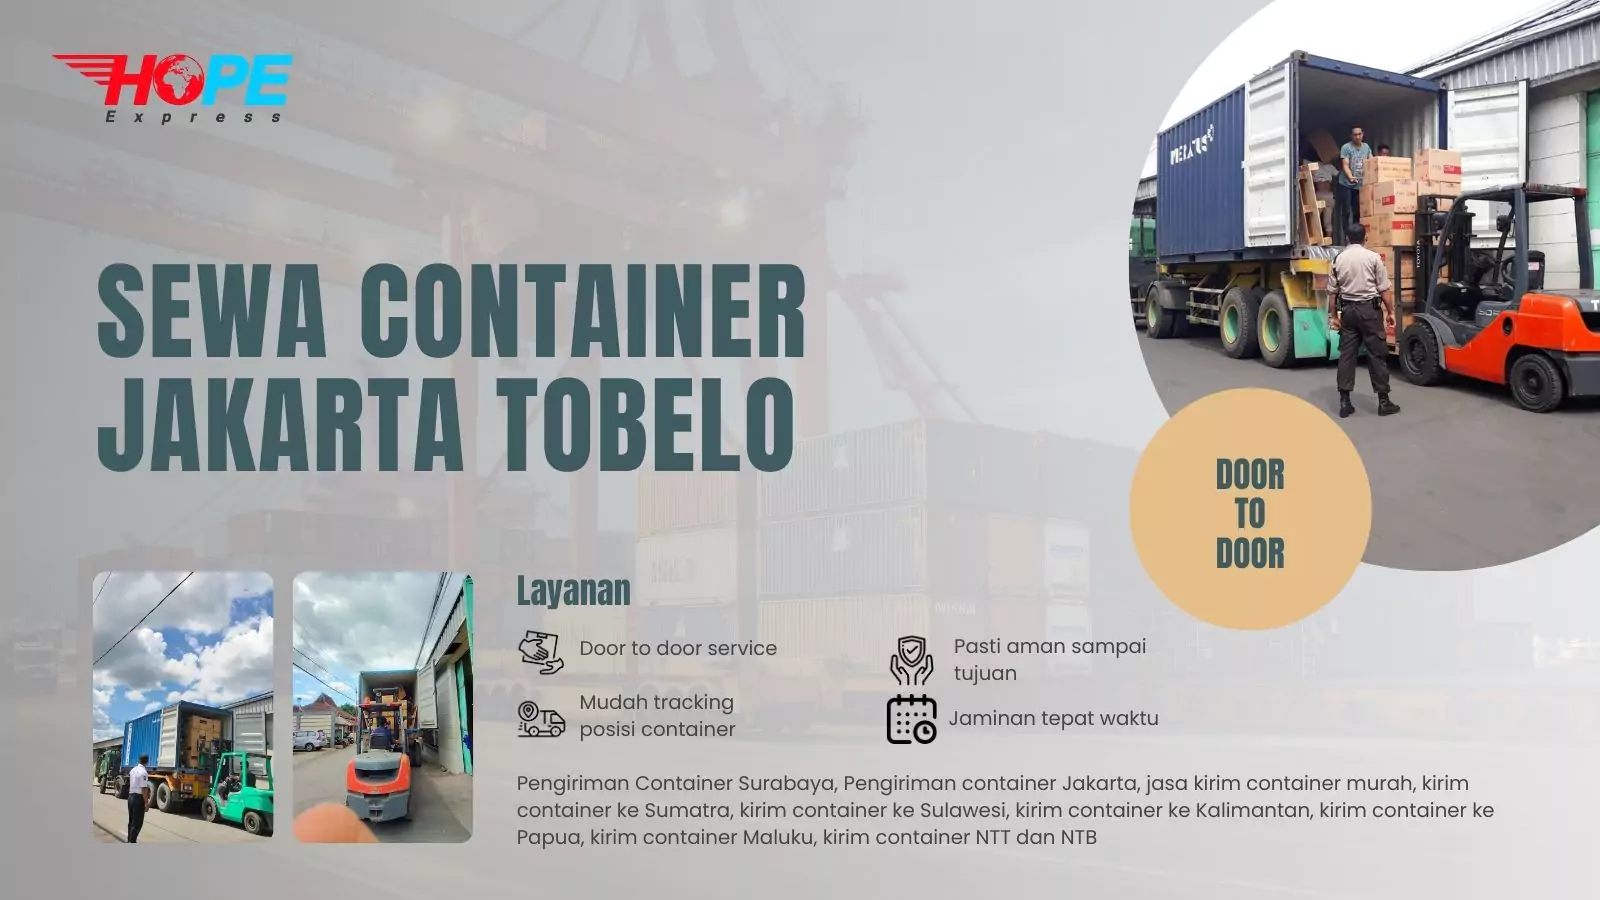 Sewa Container Jakarta Tobelo